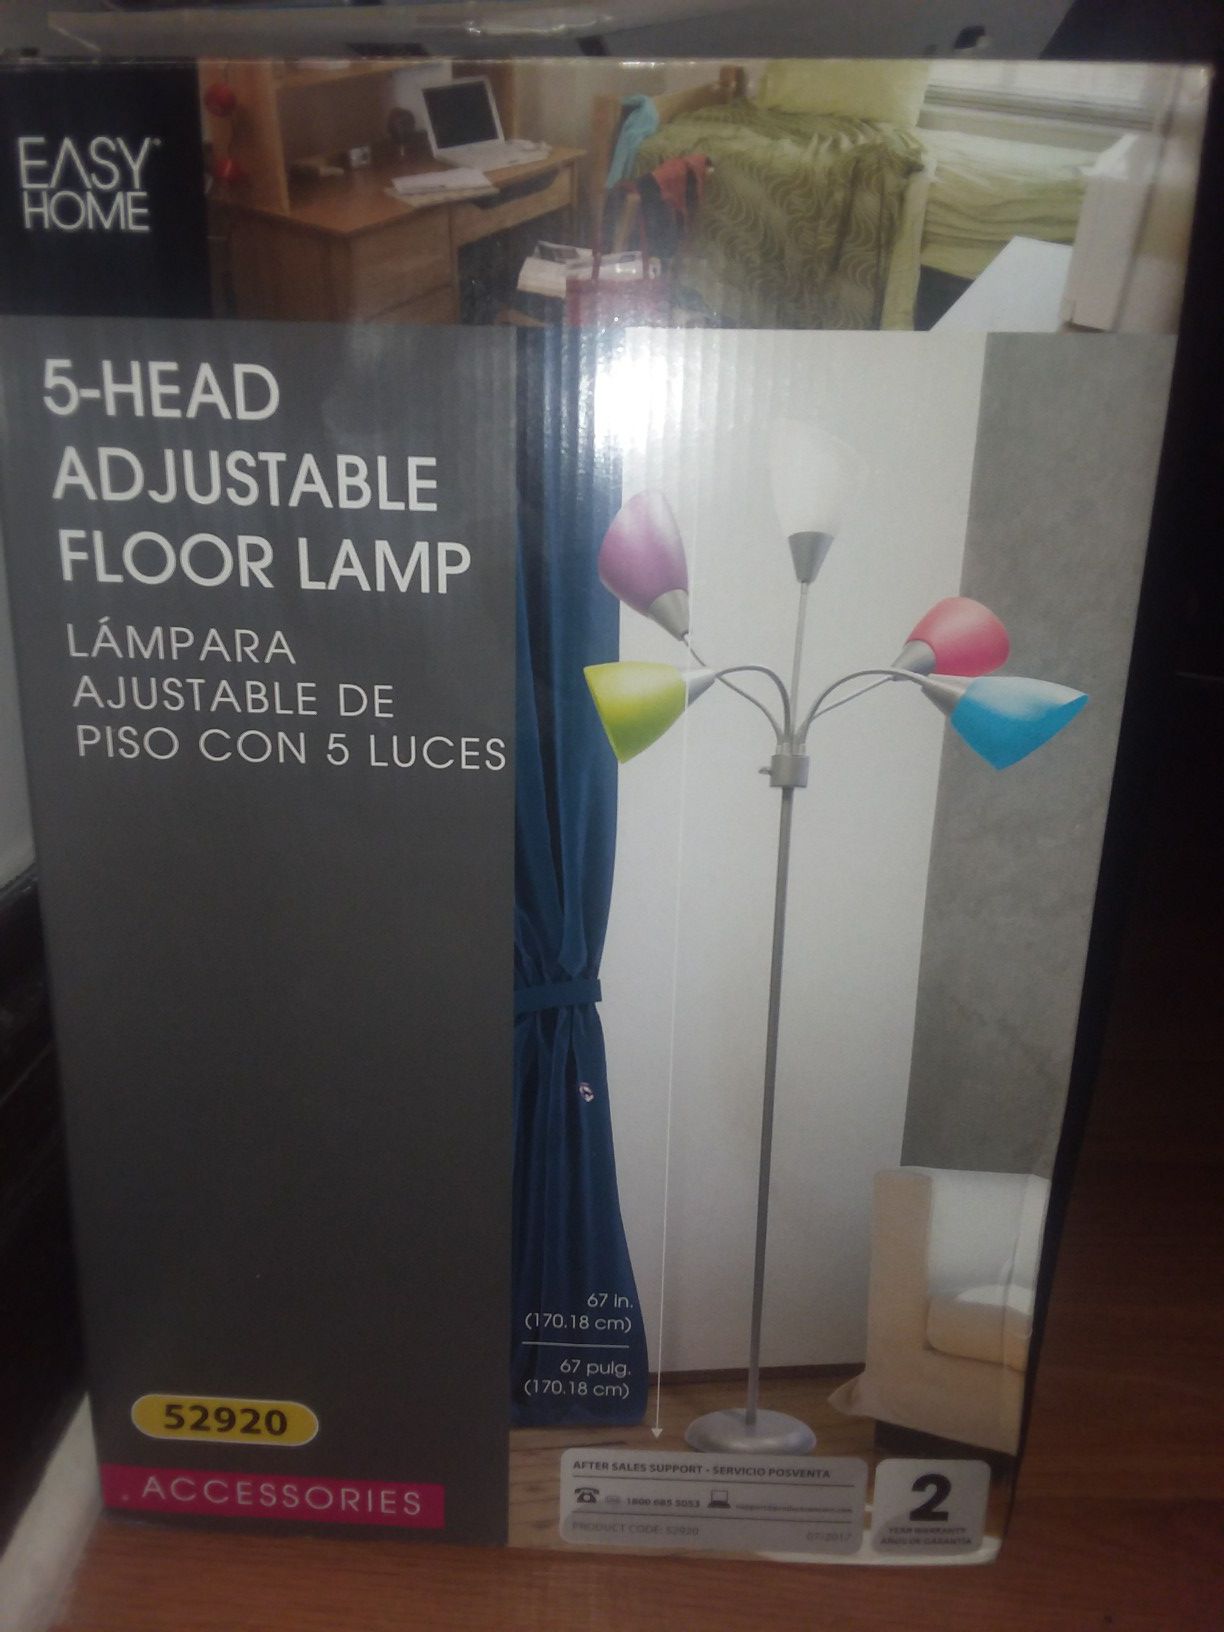 Easy Home 5 head adjustable floor lamp